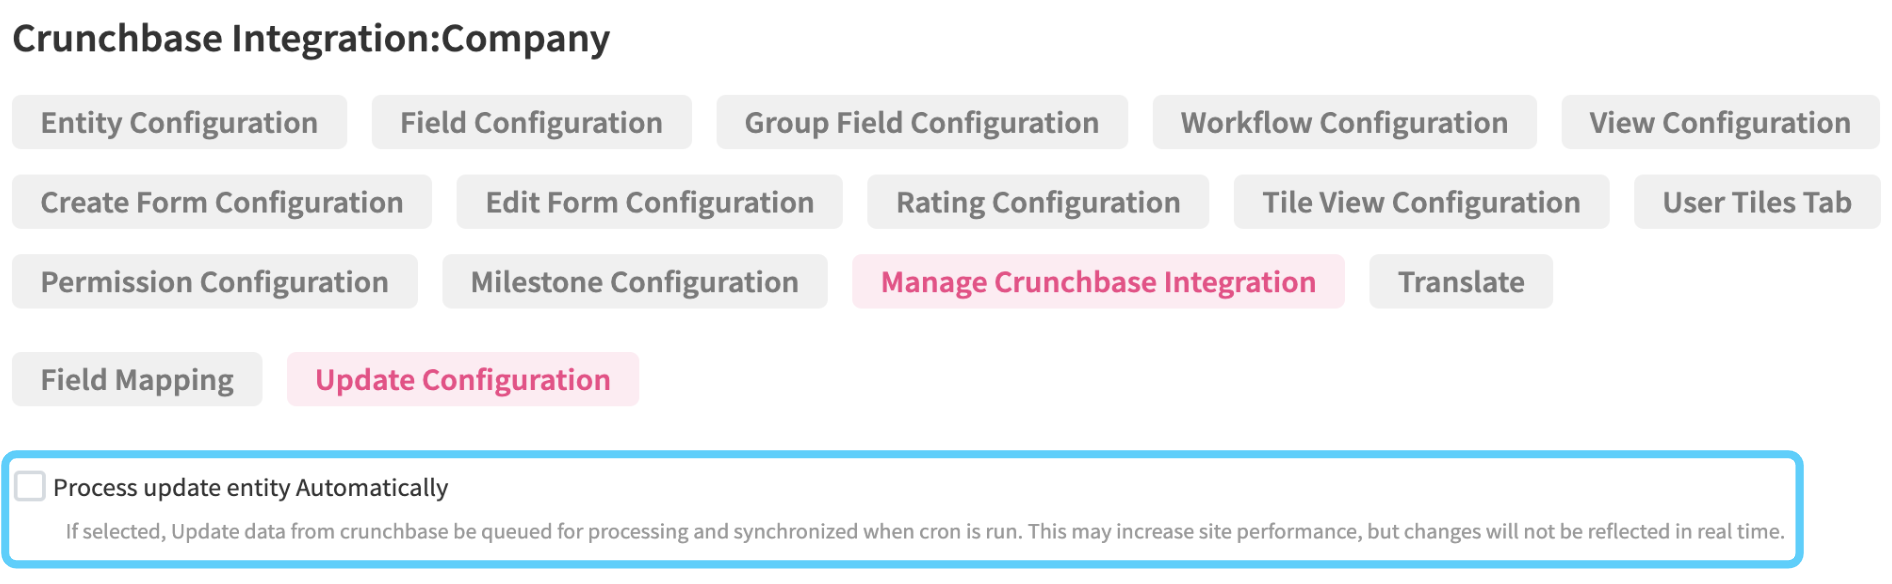 Crunchbase Configuration.png